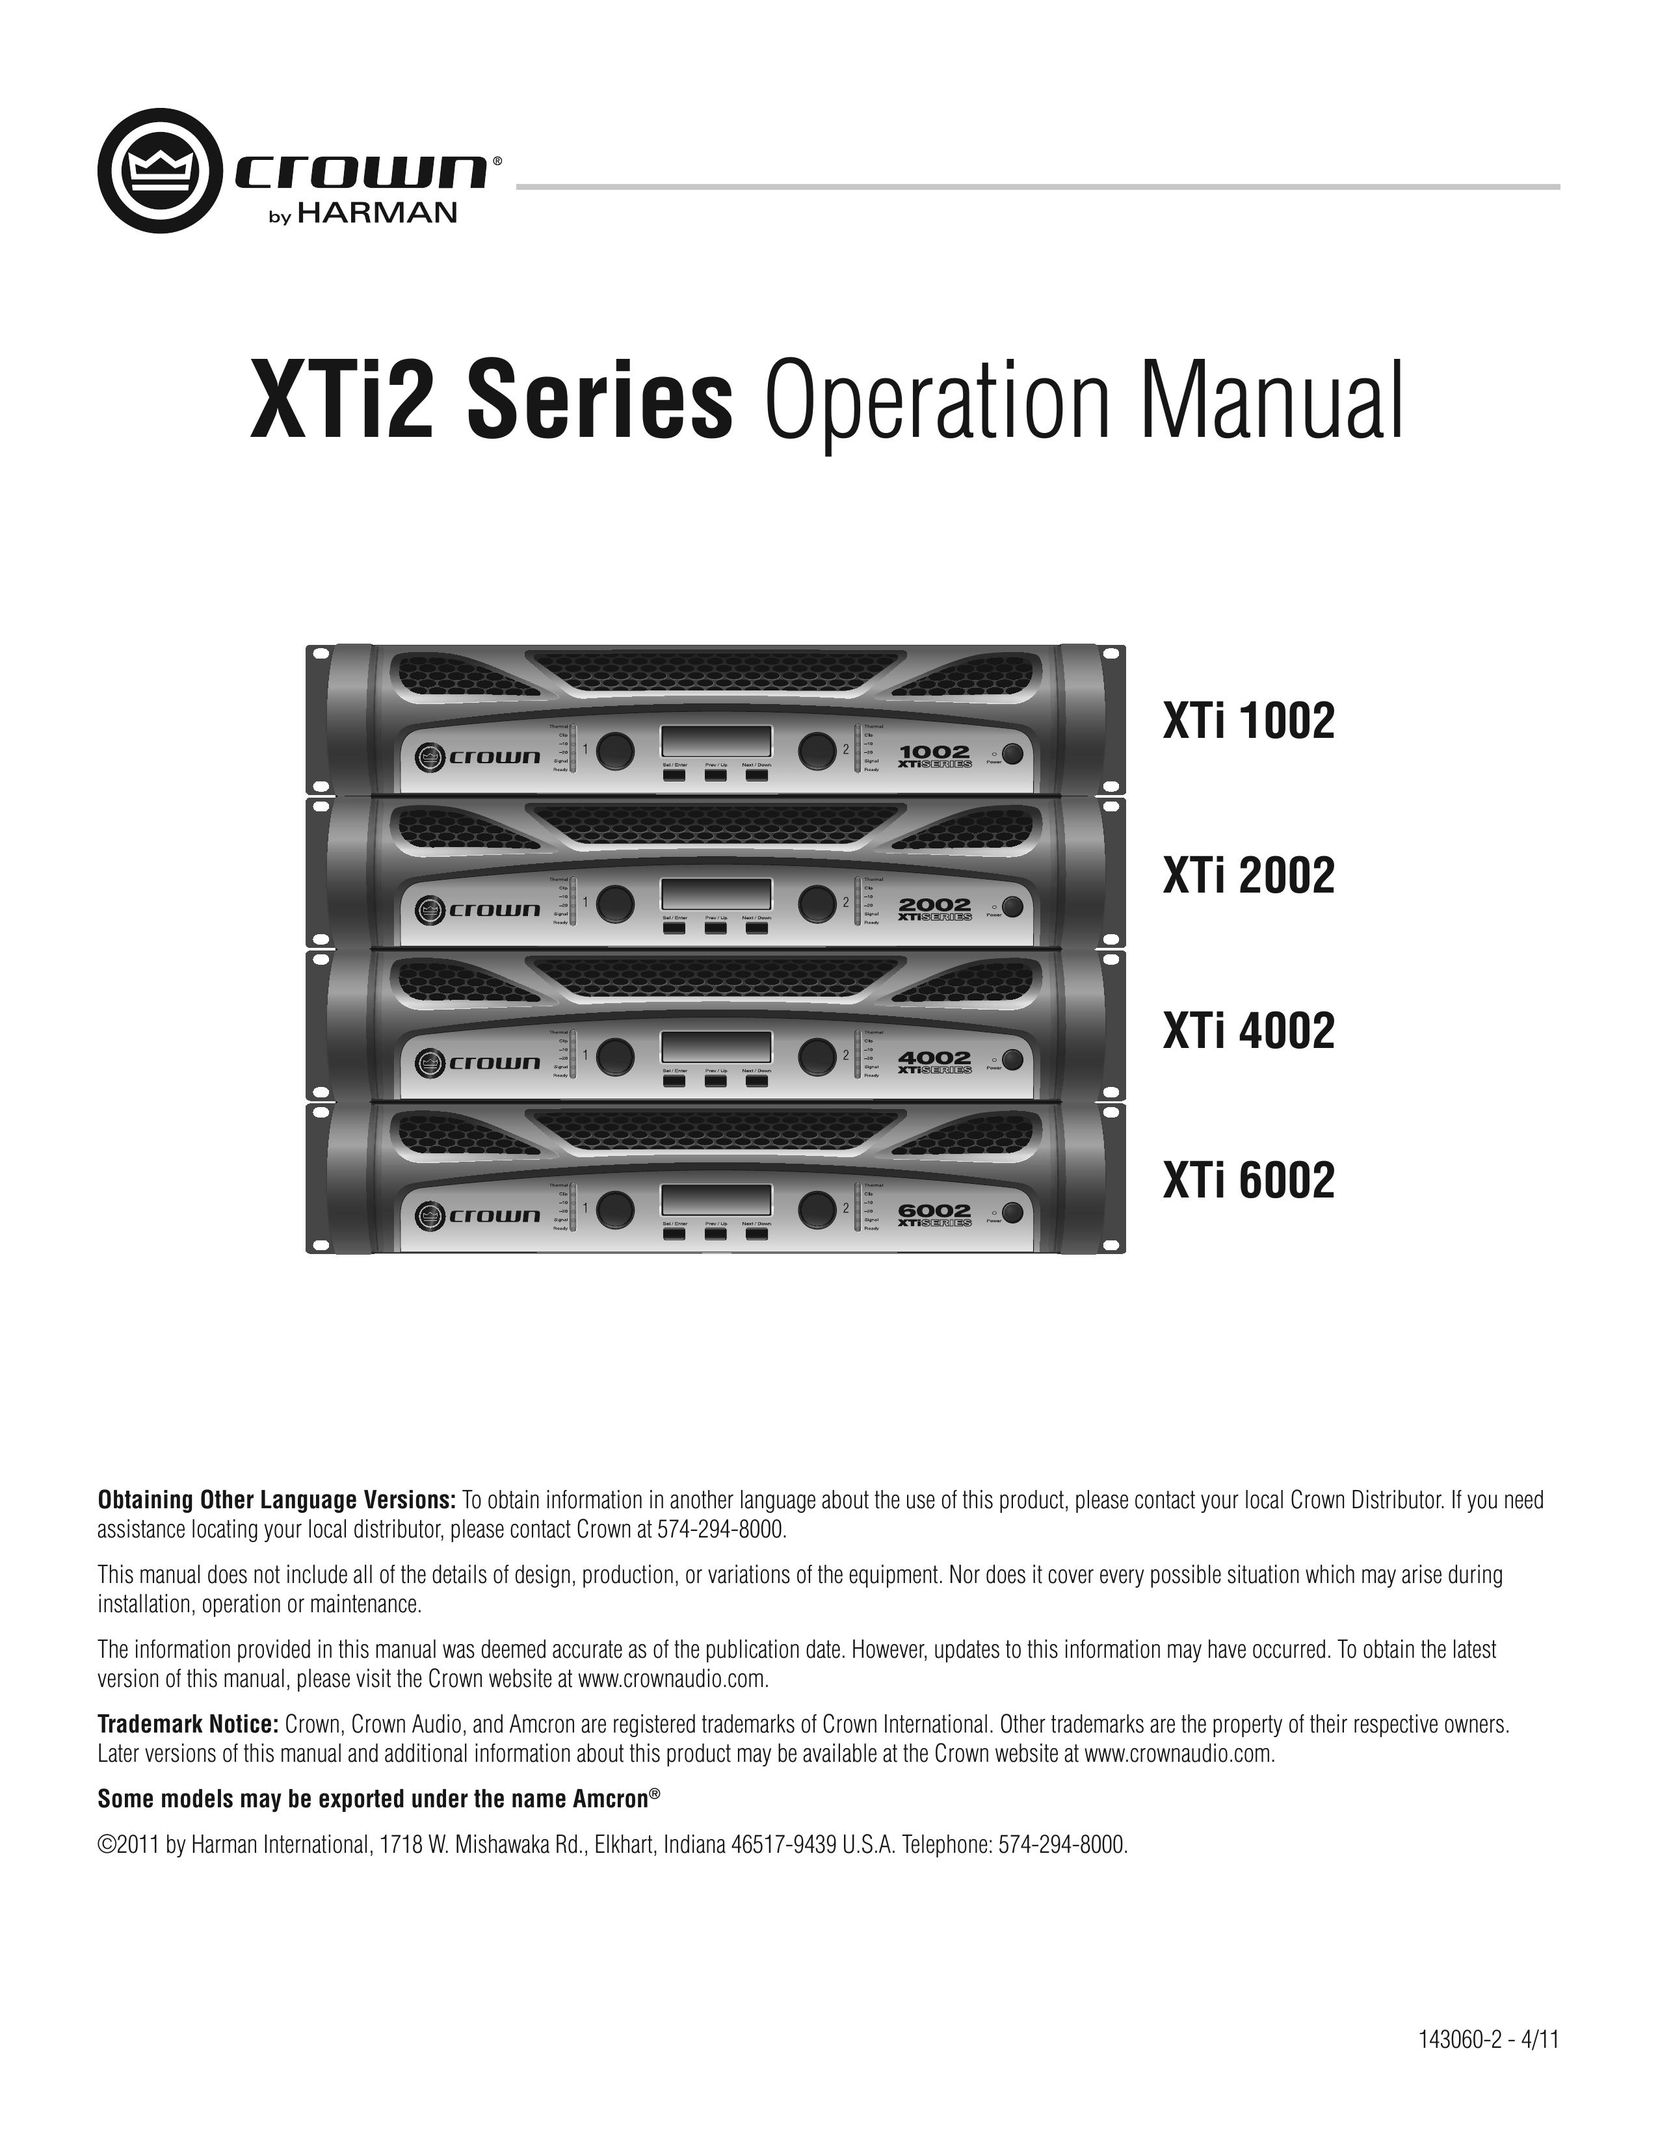 Crown XTI 2002 Car Amplifier User Manual